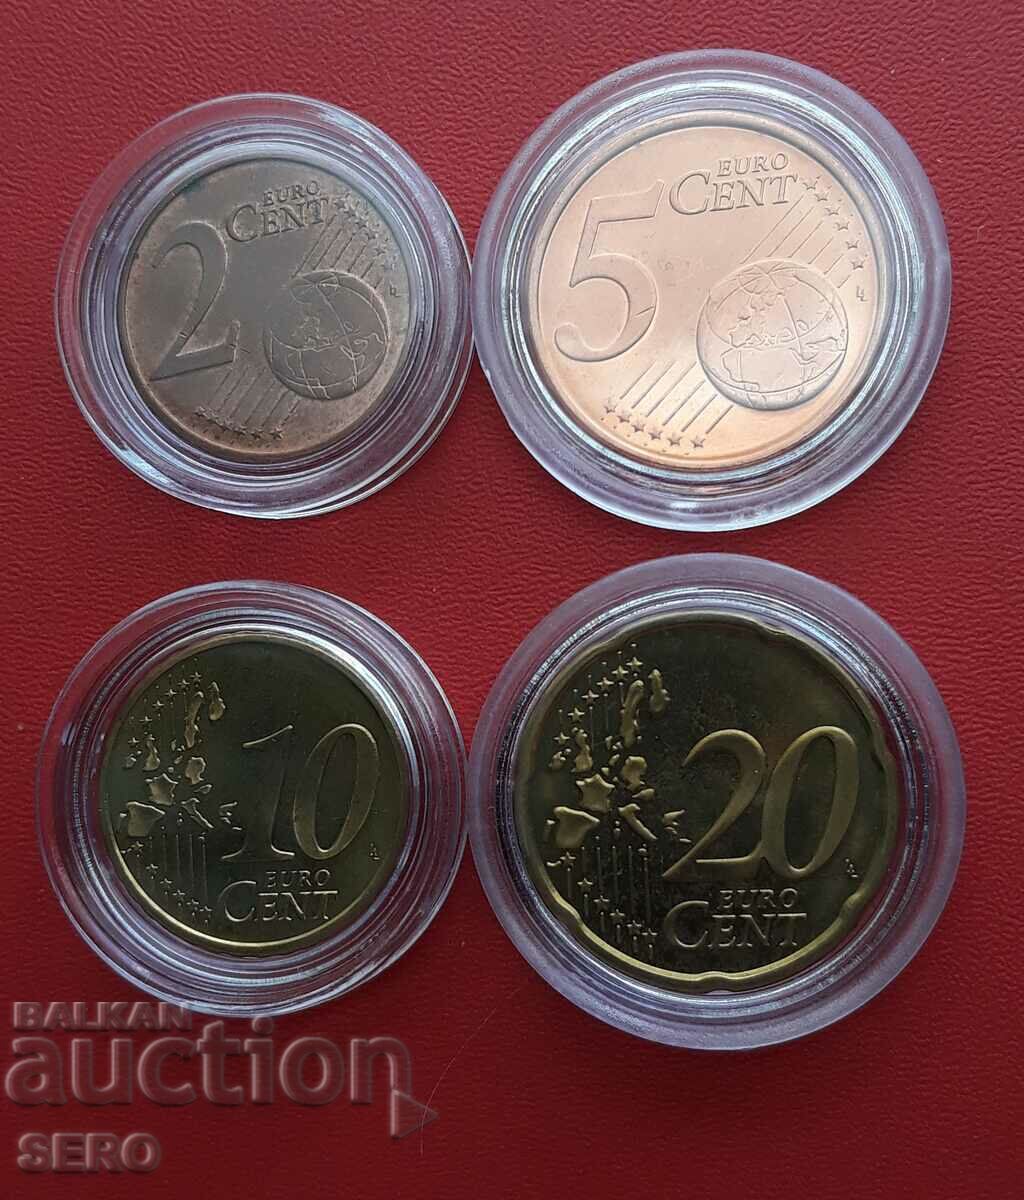 Lot mixt de monede de 4 euro